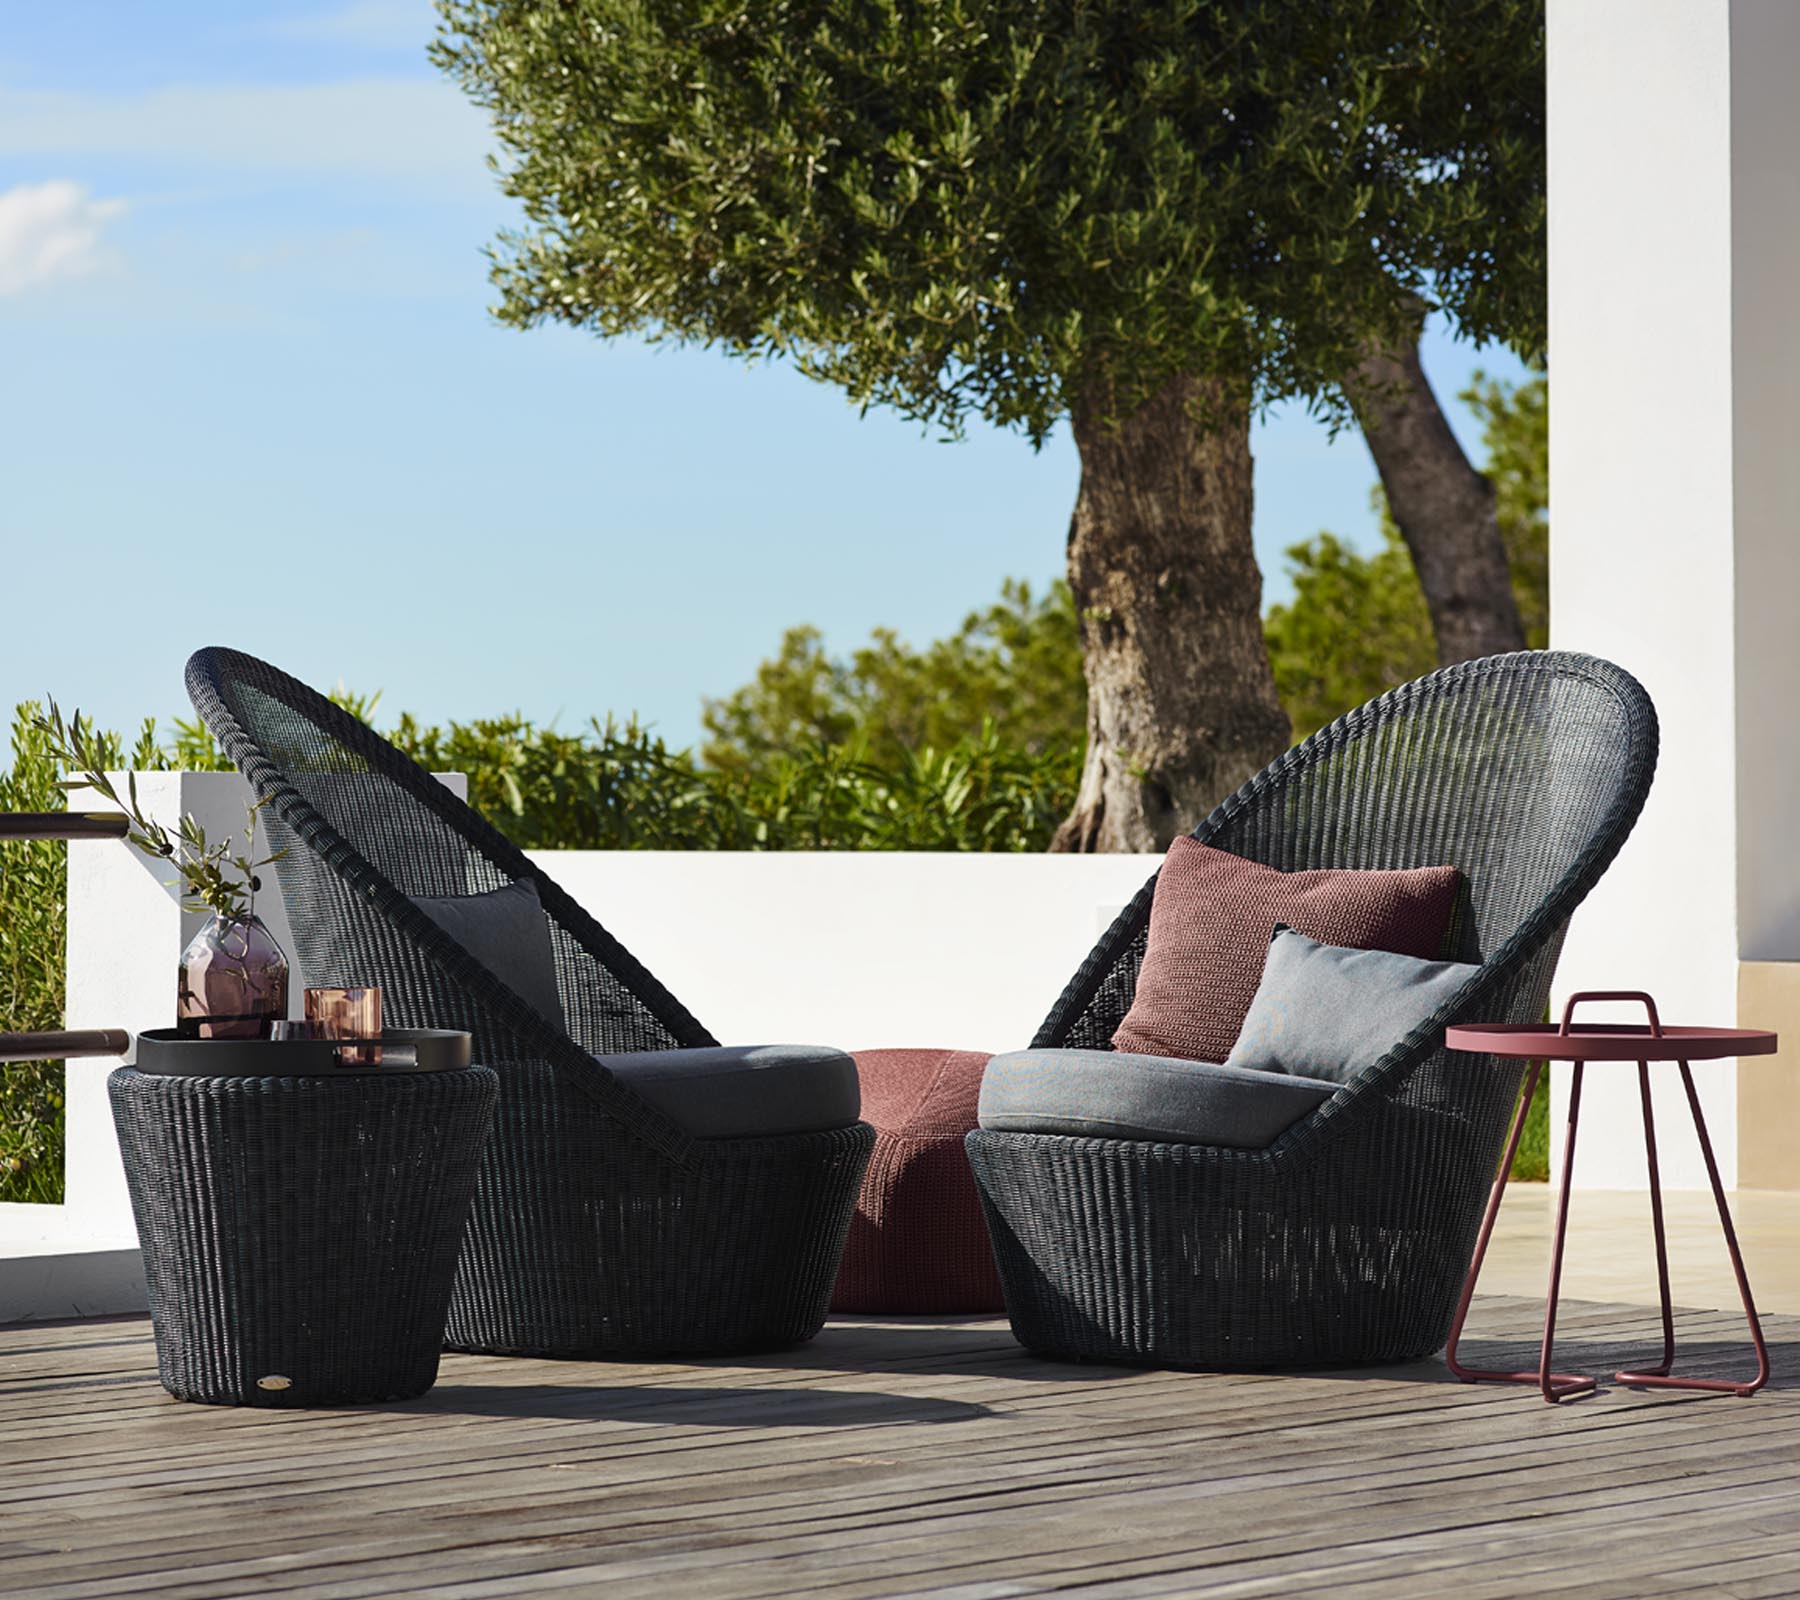 Cane-Line Denmark Outdoor Chairs Cane-Line Kingston sunchair w/wheels and Cushions